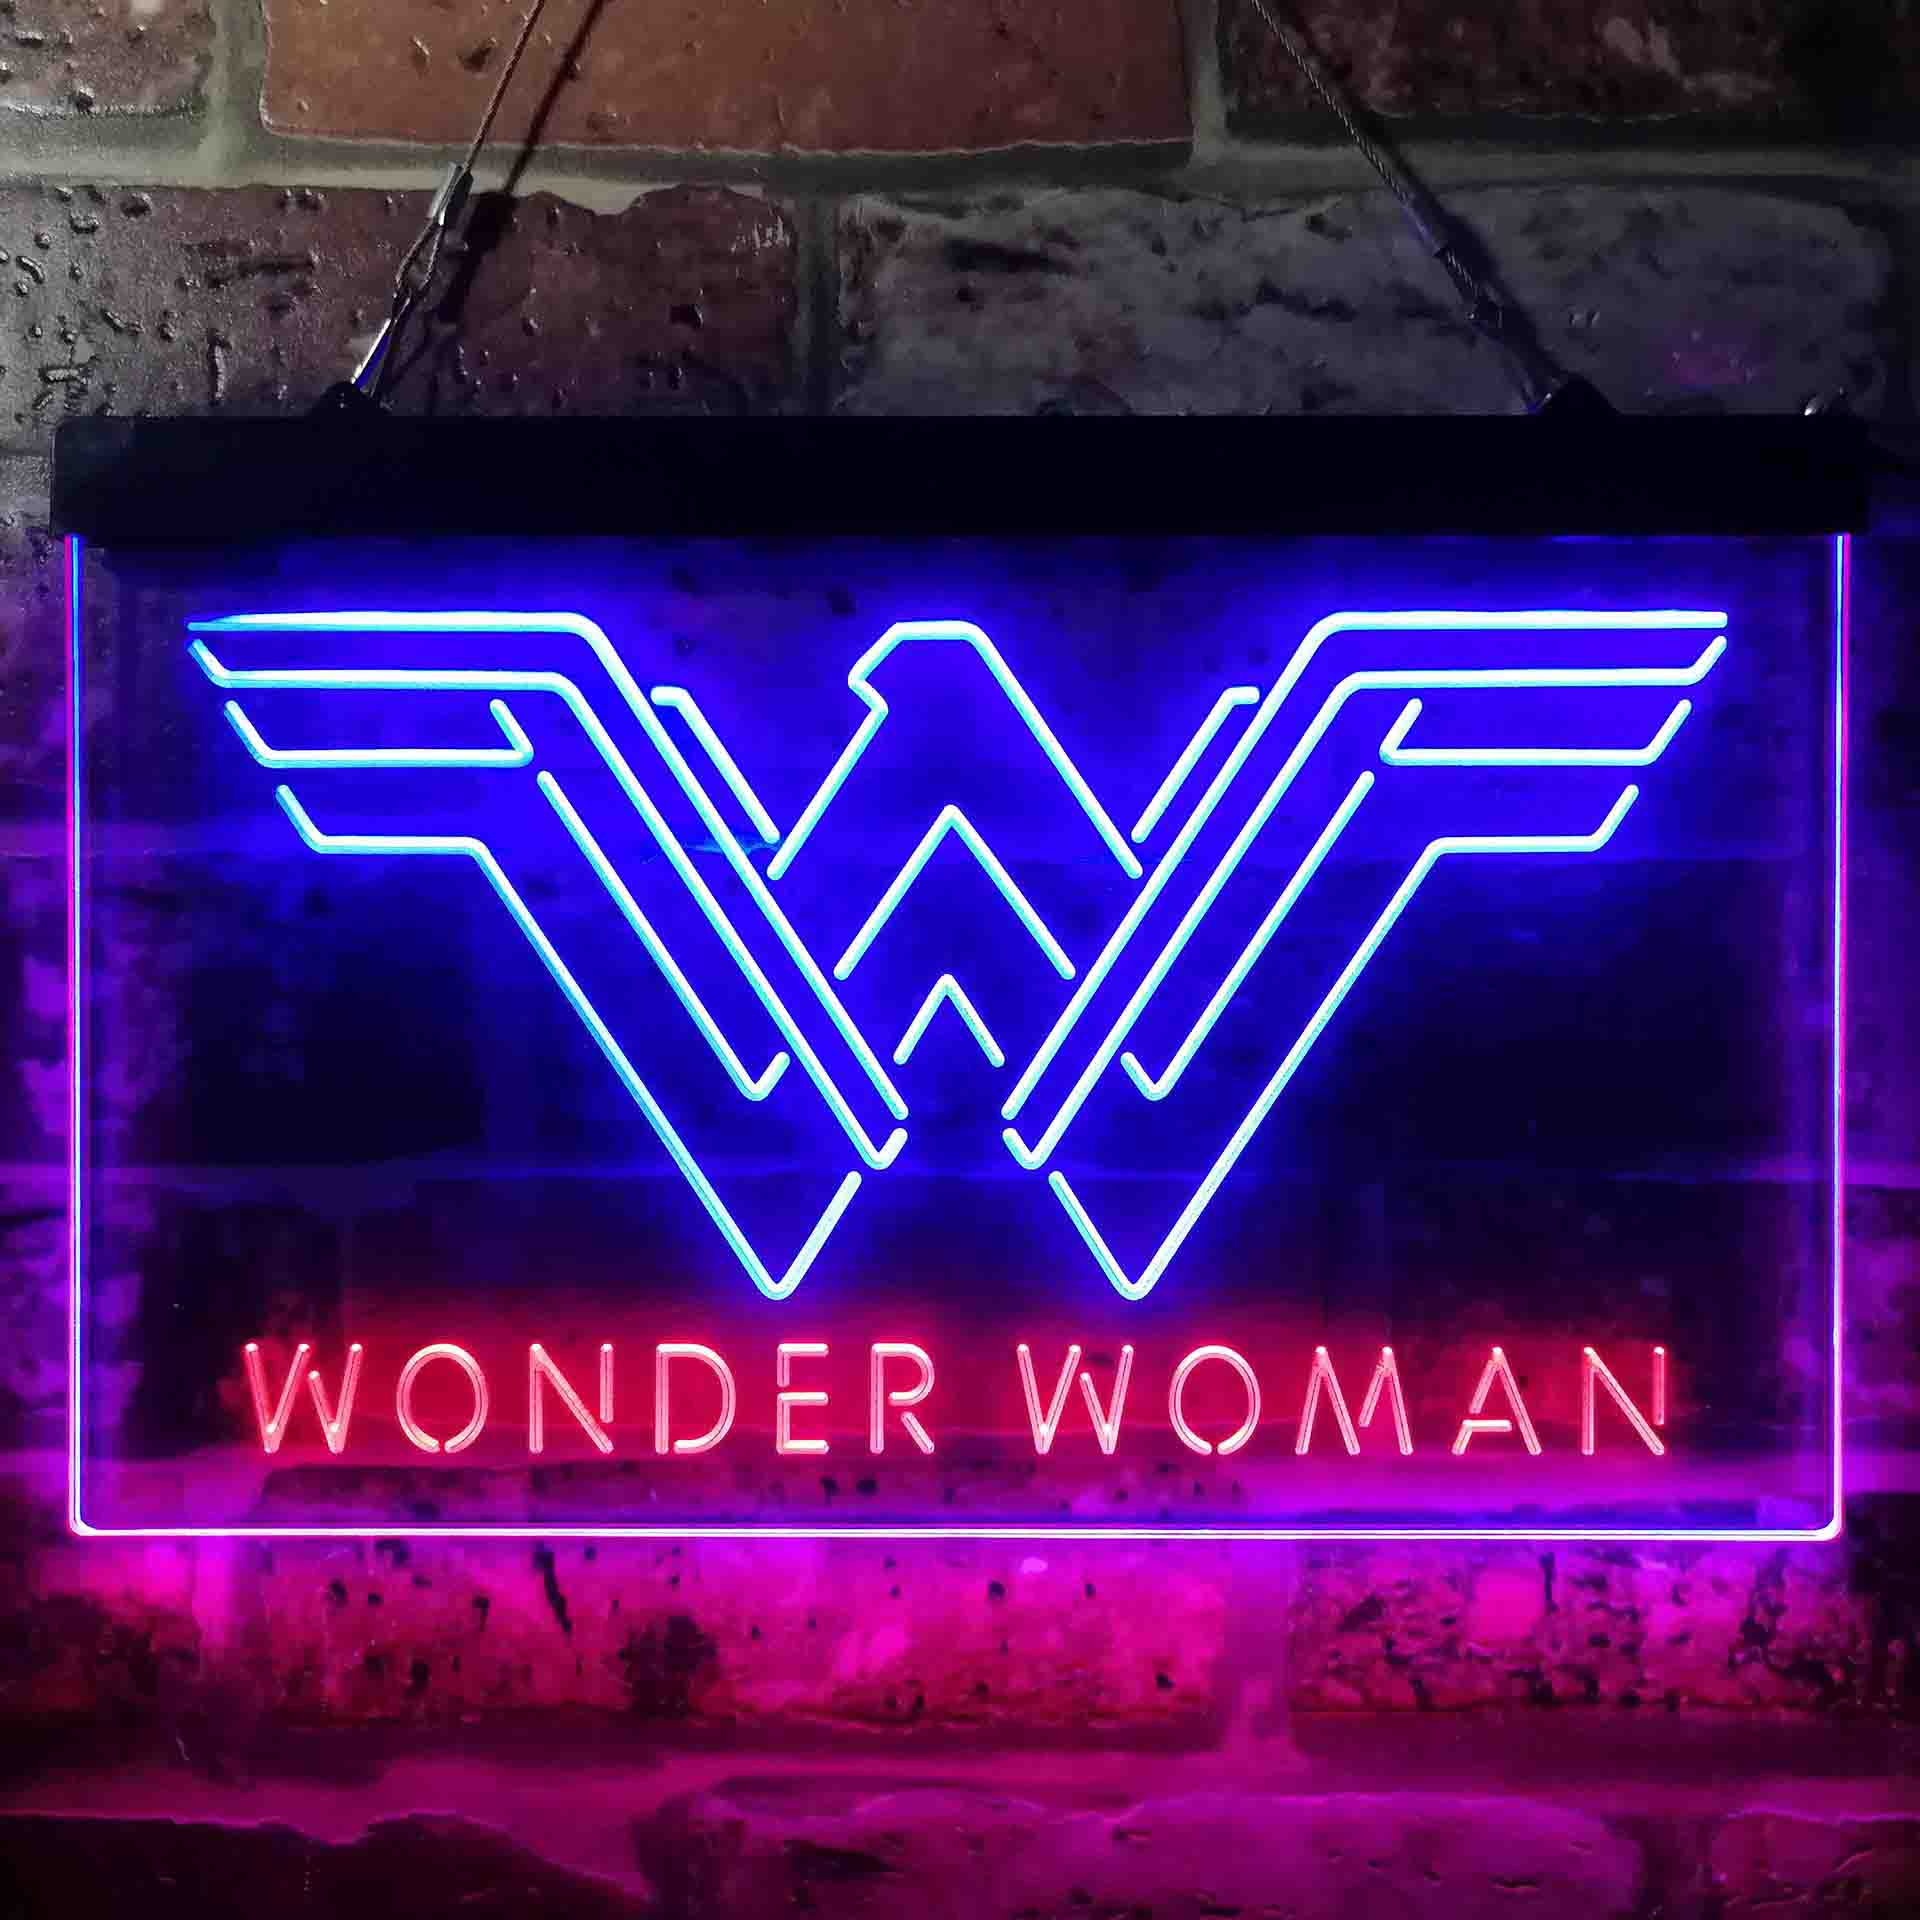 DC Wonder Woman 1984 Game Room Neon Light LED Sign